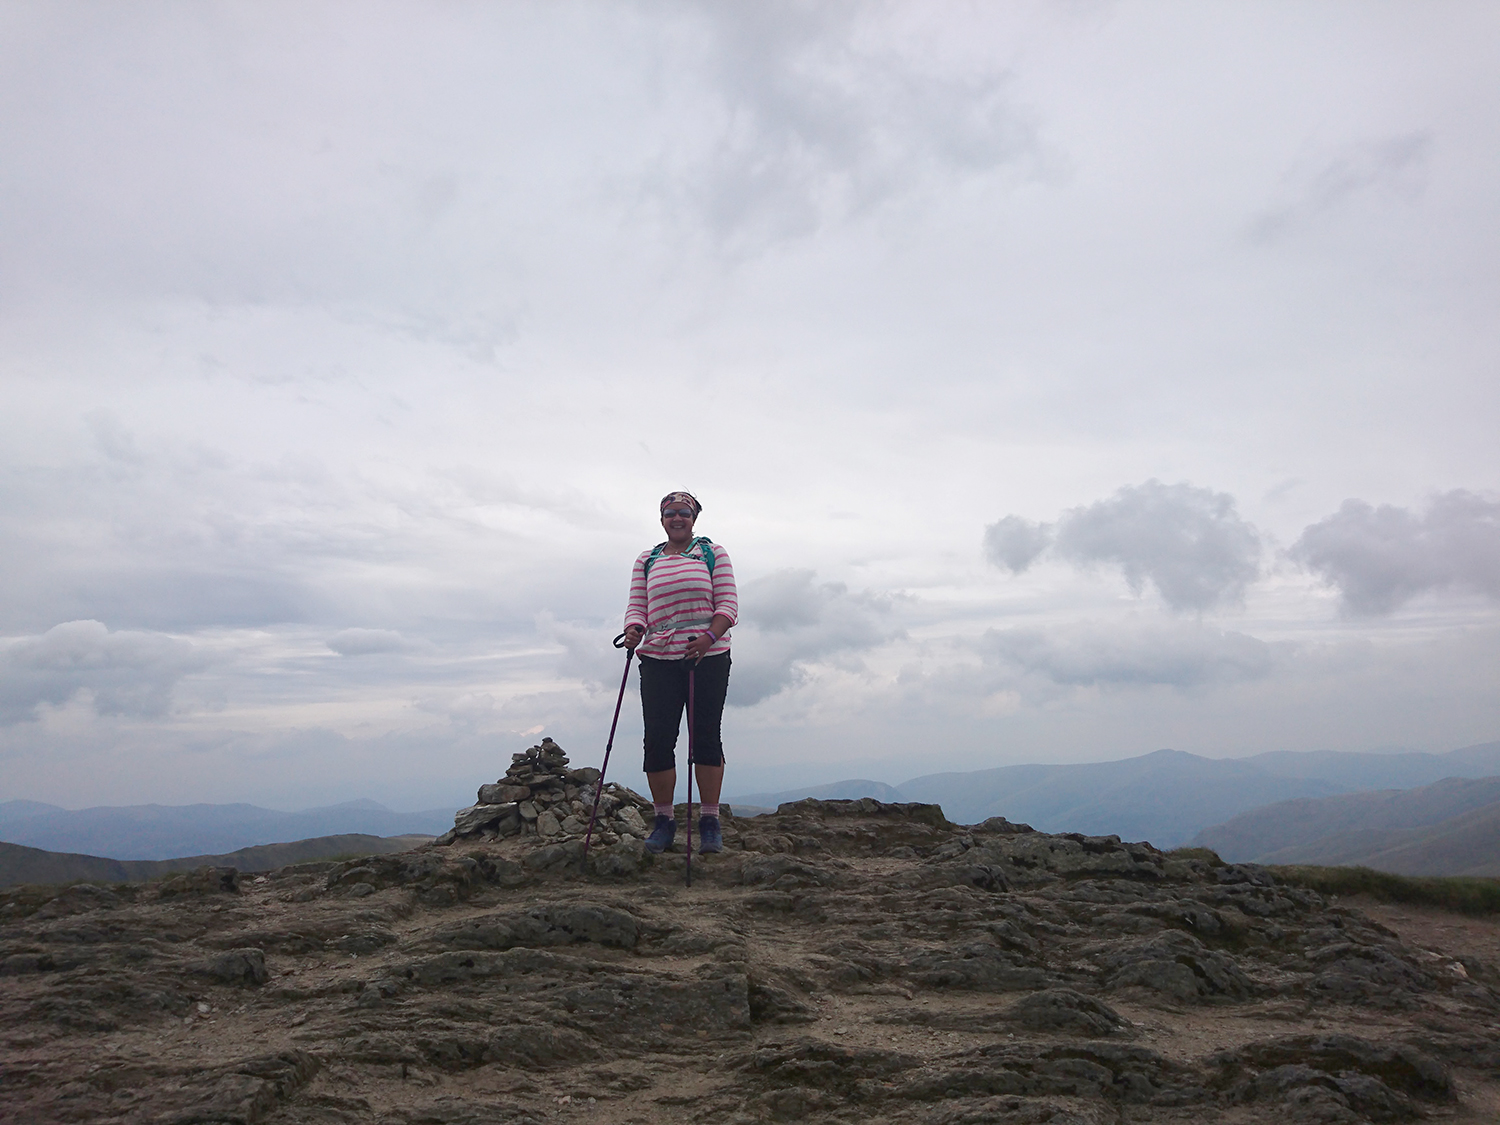 Me at the summit of Beinn Ghlas Mountain, Scotland